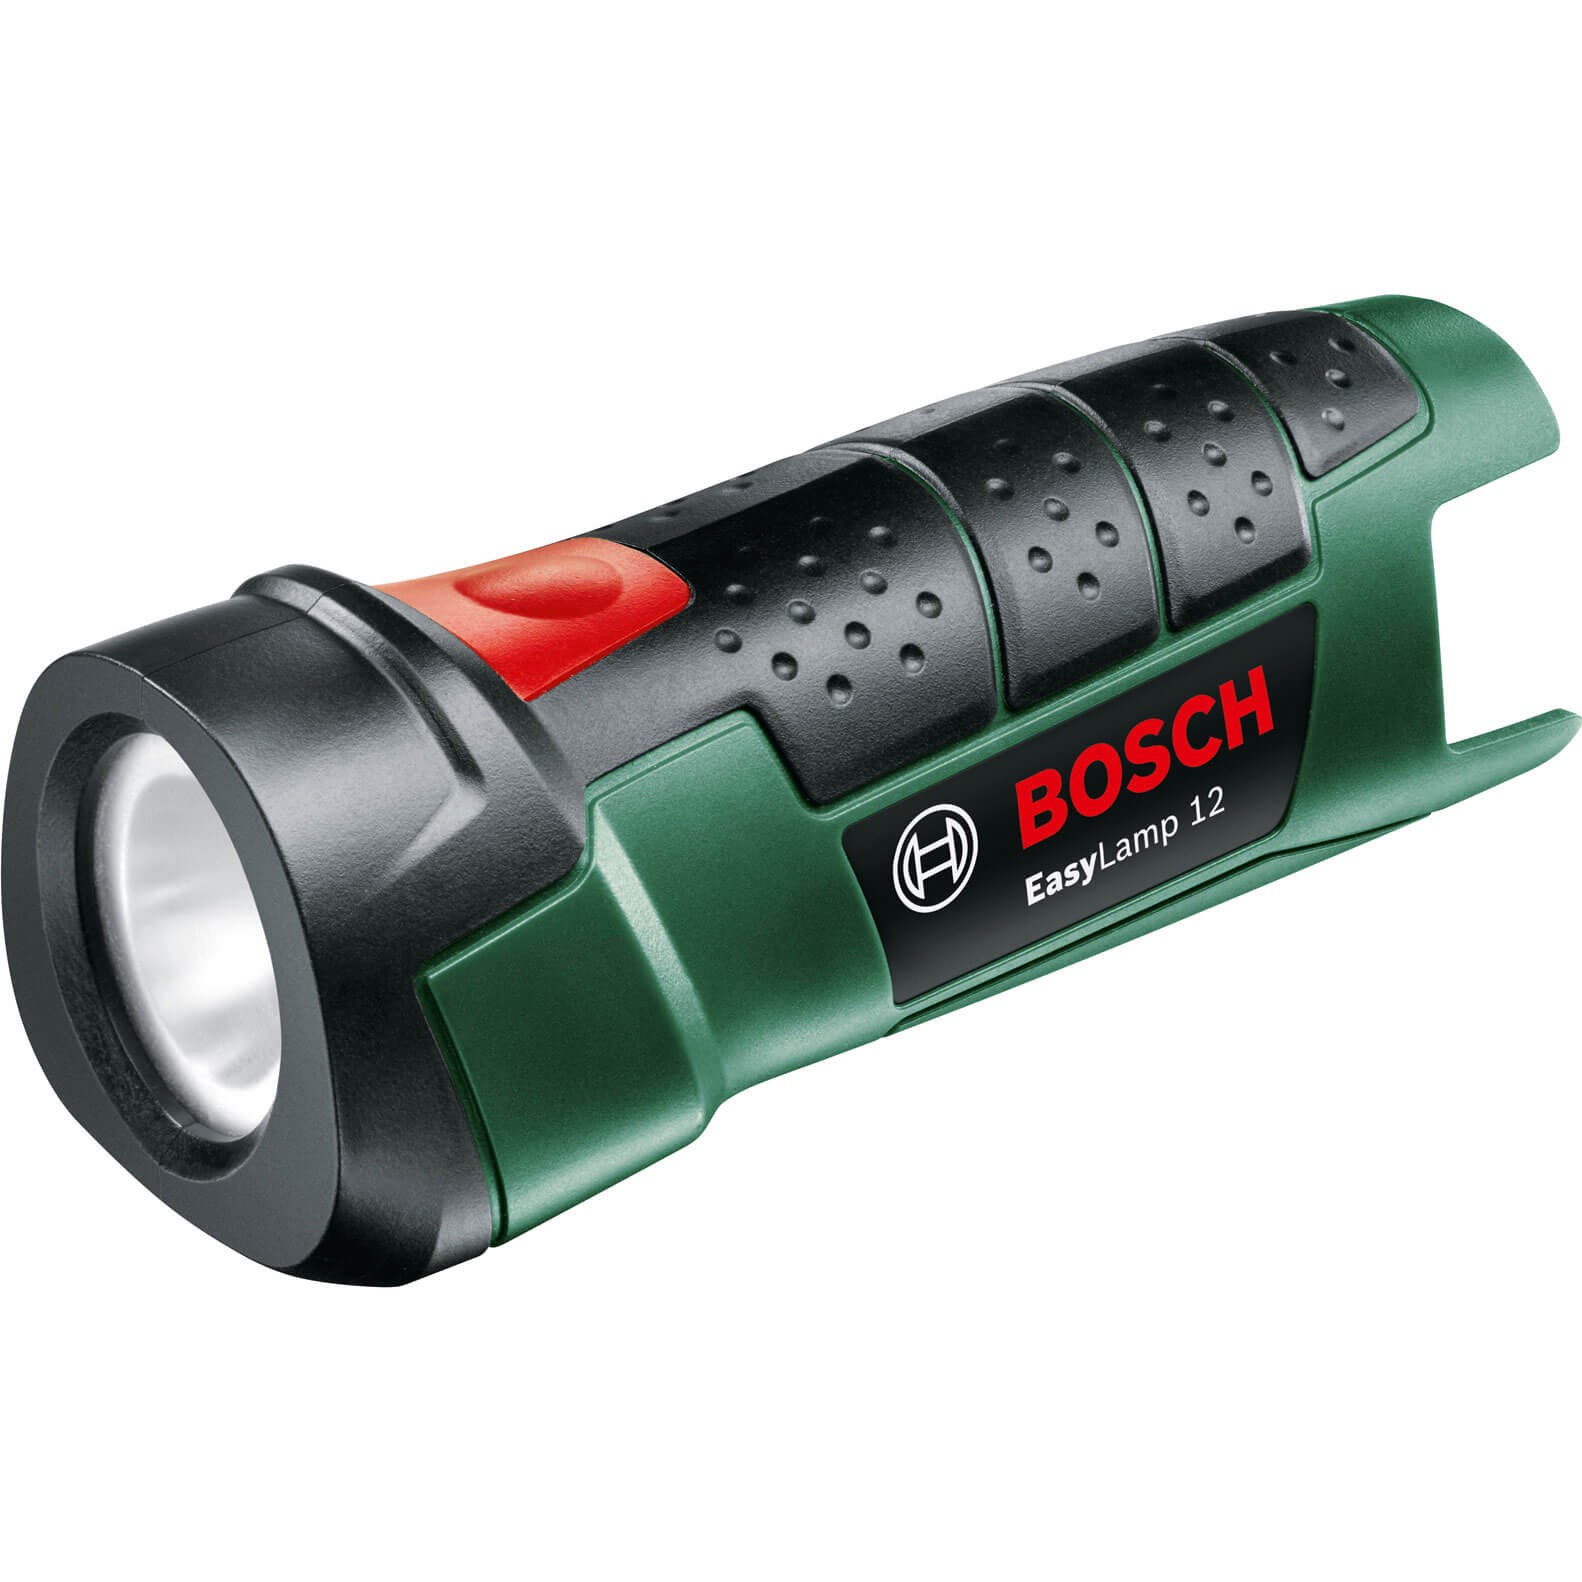 Image of Bosch EASYLAMP 12v Cordless Torch No Batteries No Charger No Case